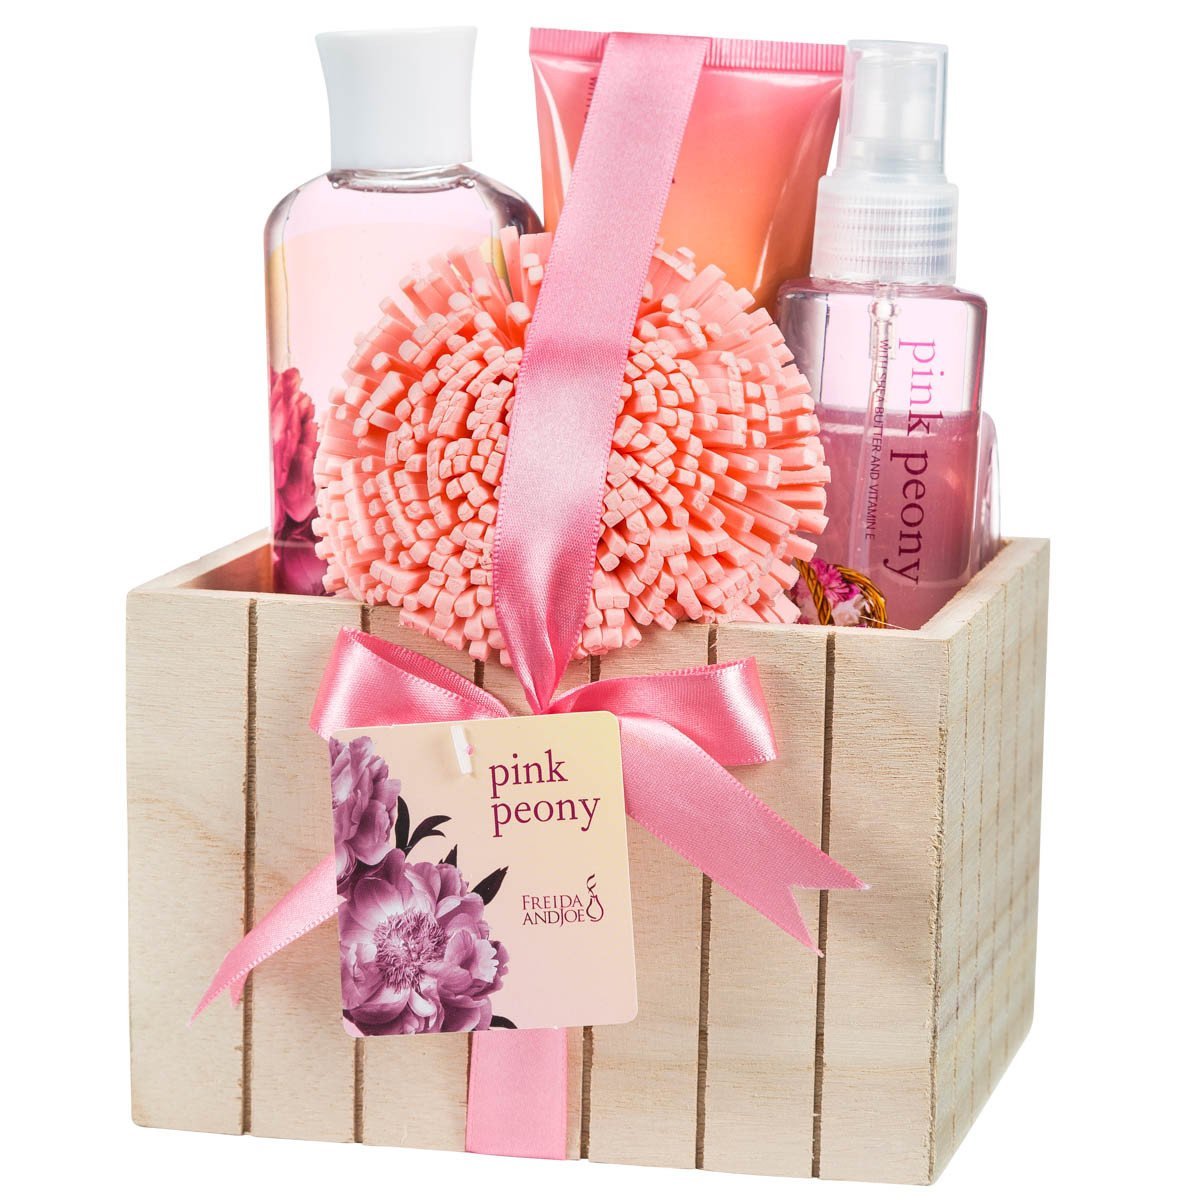 Pink Peony Spa Bath Gift: Shower Gel, Bubble Bath, Body Spray, Body Lotion & Sponge